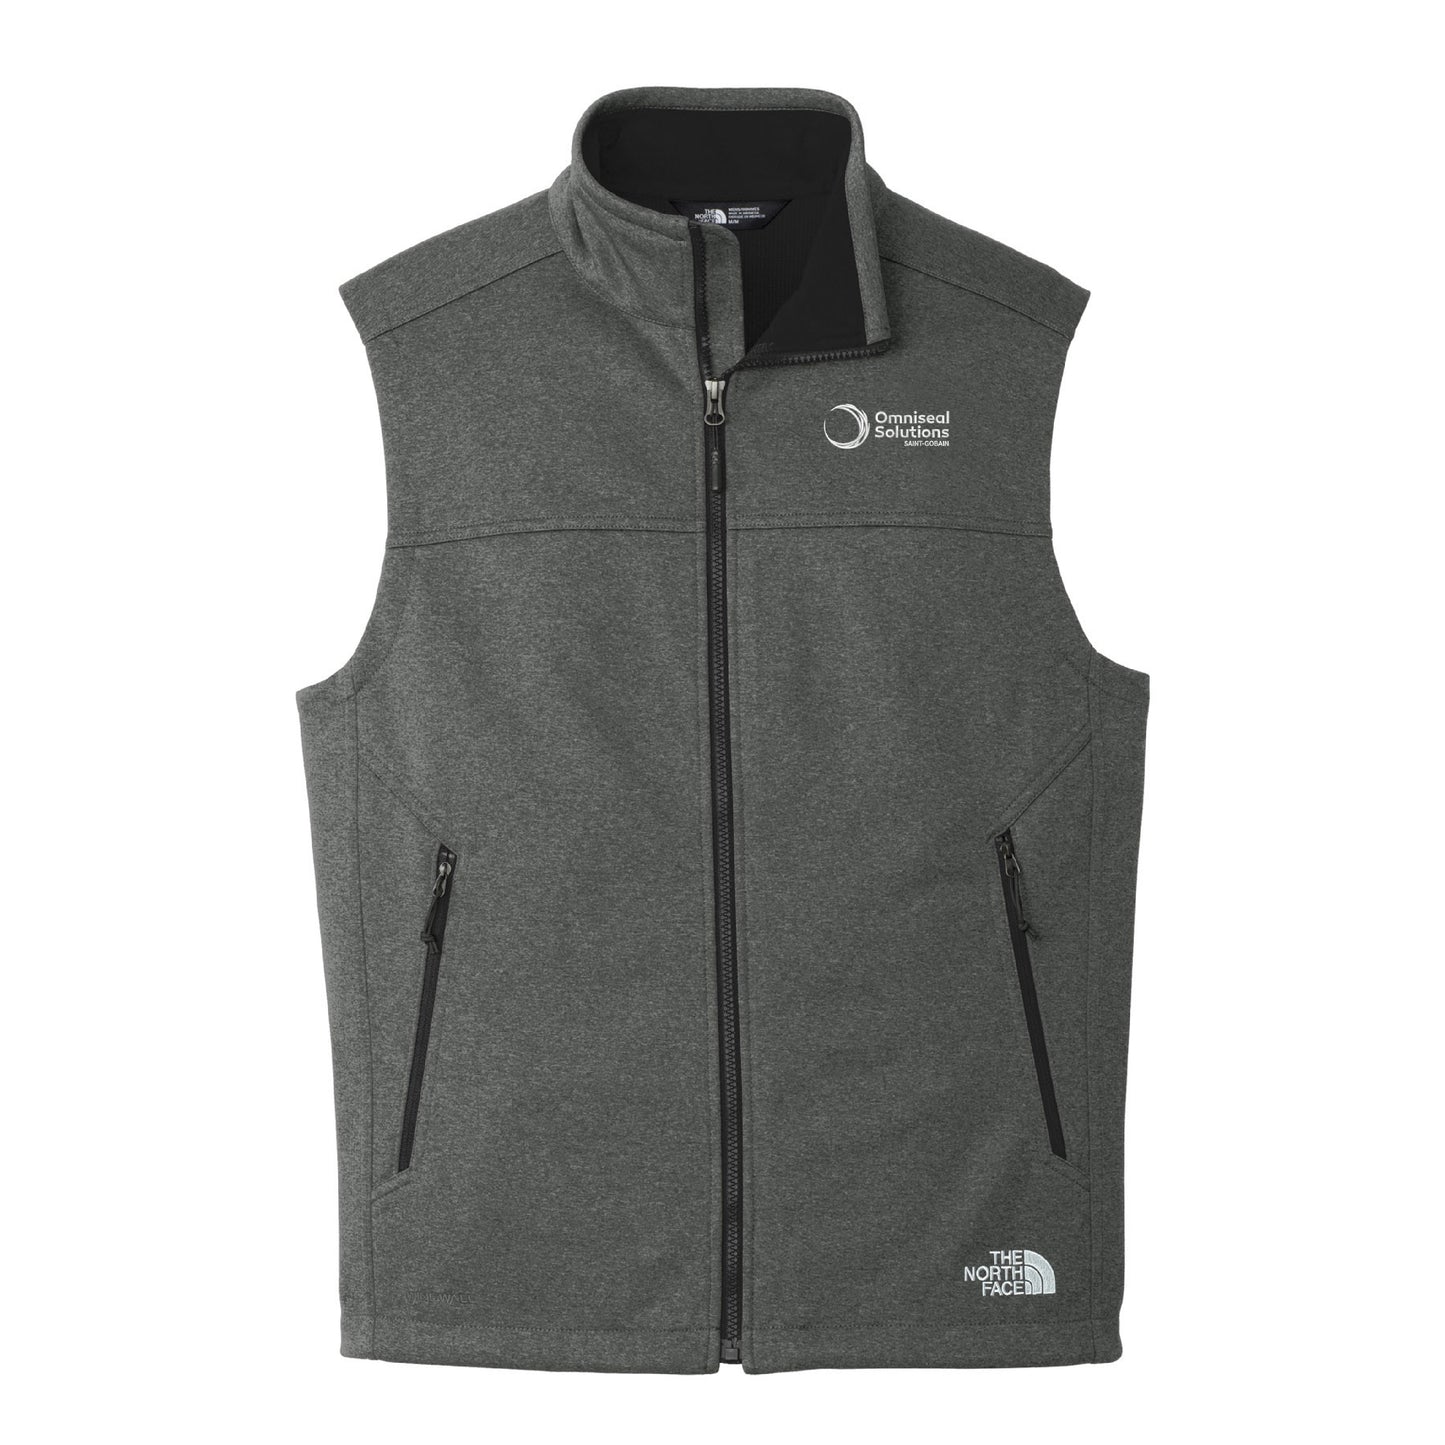 North Face® Ladie's Ridgeline Soft Shell Vest - on demand